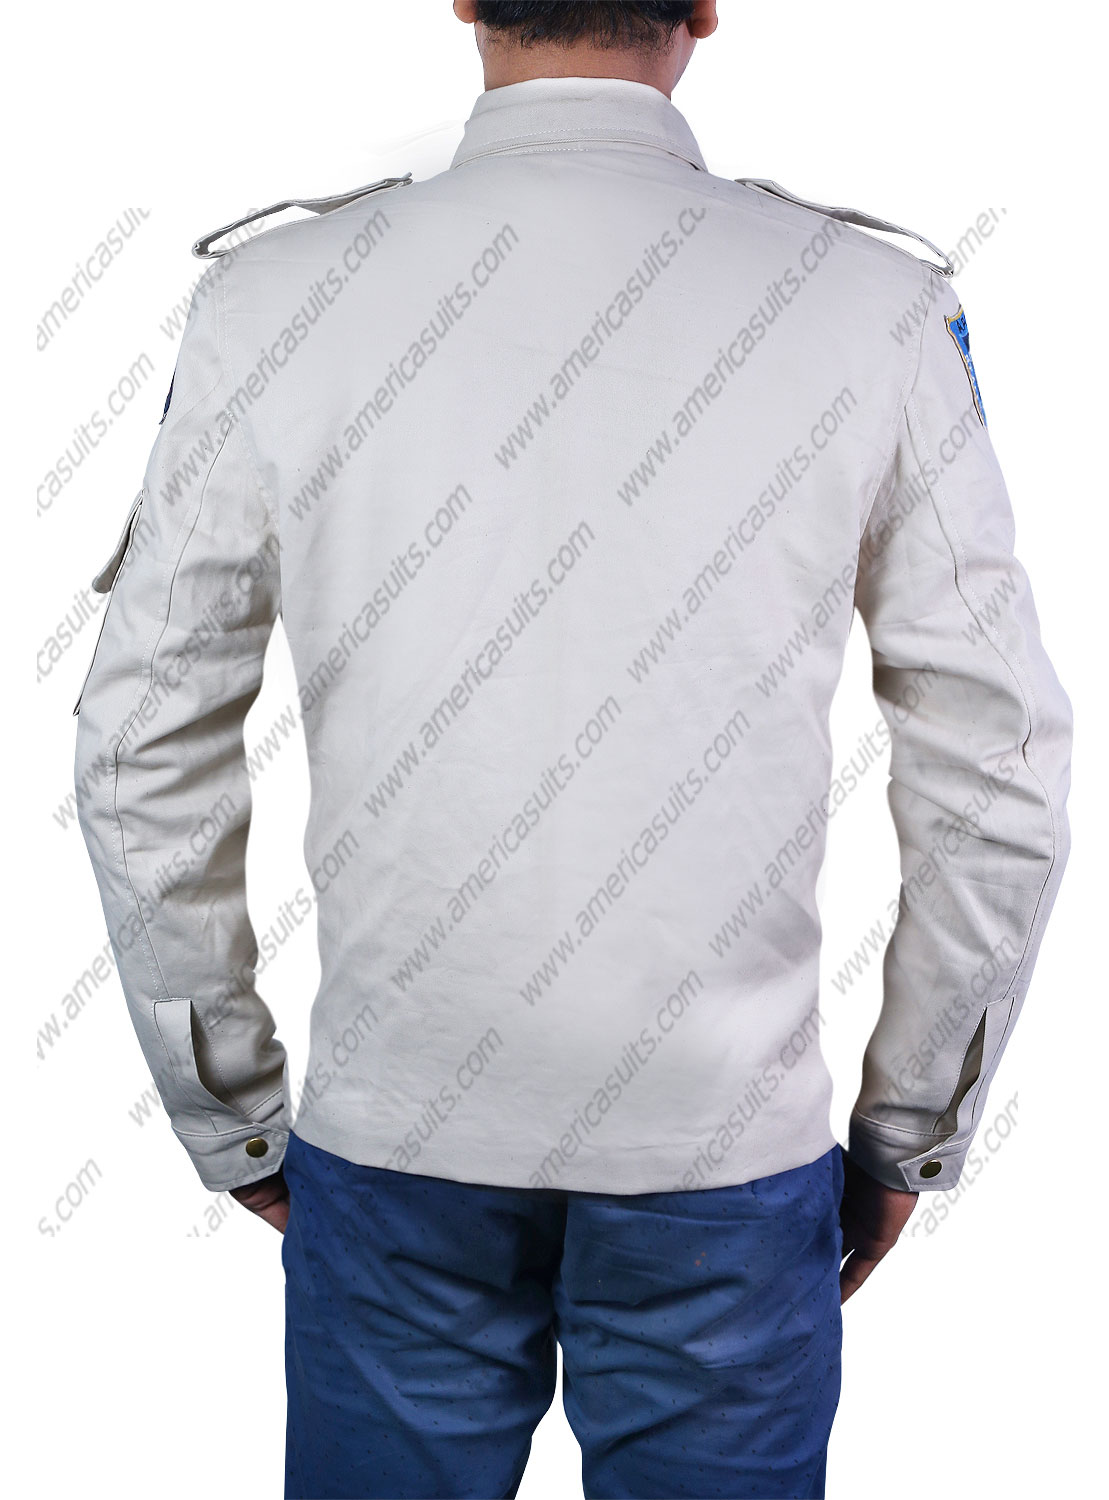 bionic-man-jacket